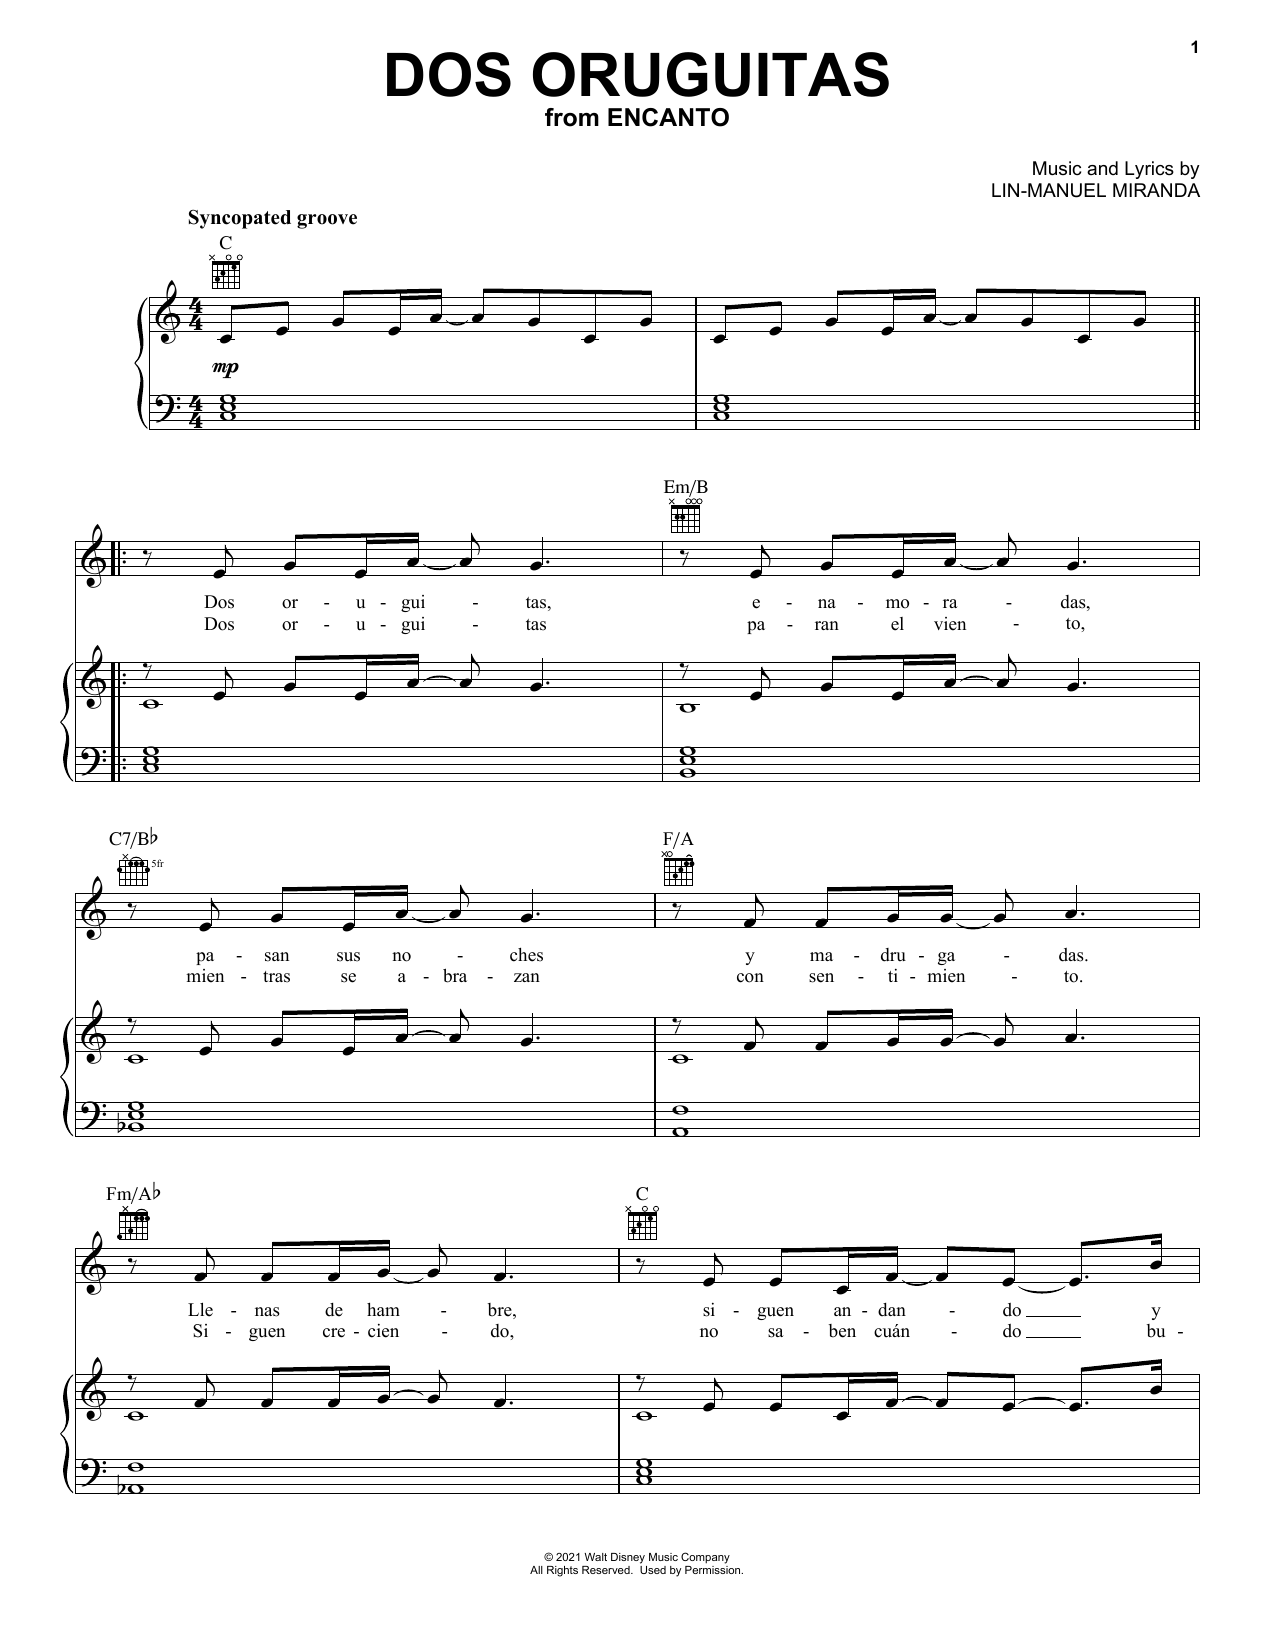 Lin-Manuel Miranda Dos Oruguitas (from Encanto) Sheet Music Notes & Chords for Alto Sax Solo - Download or Print PDF